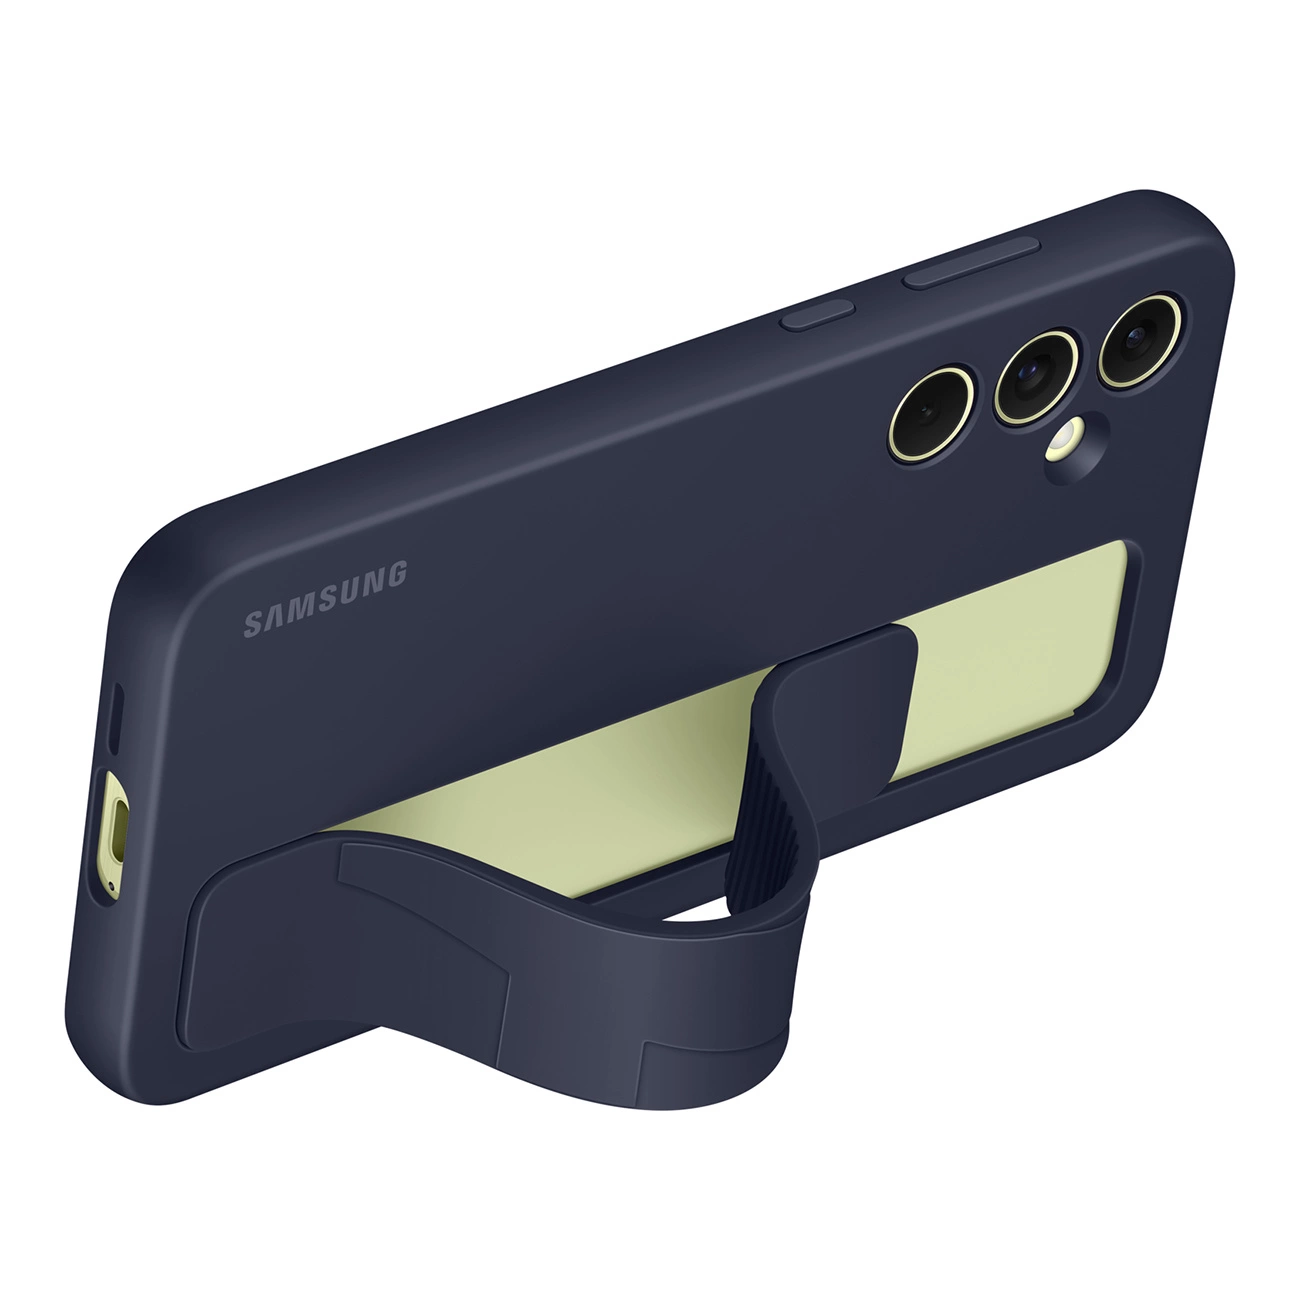 Pouzdro Samsung Standing Grip EF-GA556TBEGWW pro Samsung Galaxy A55 s rukojetí - modré/černé